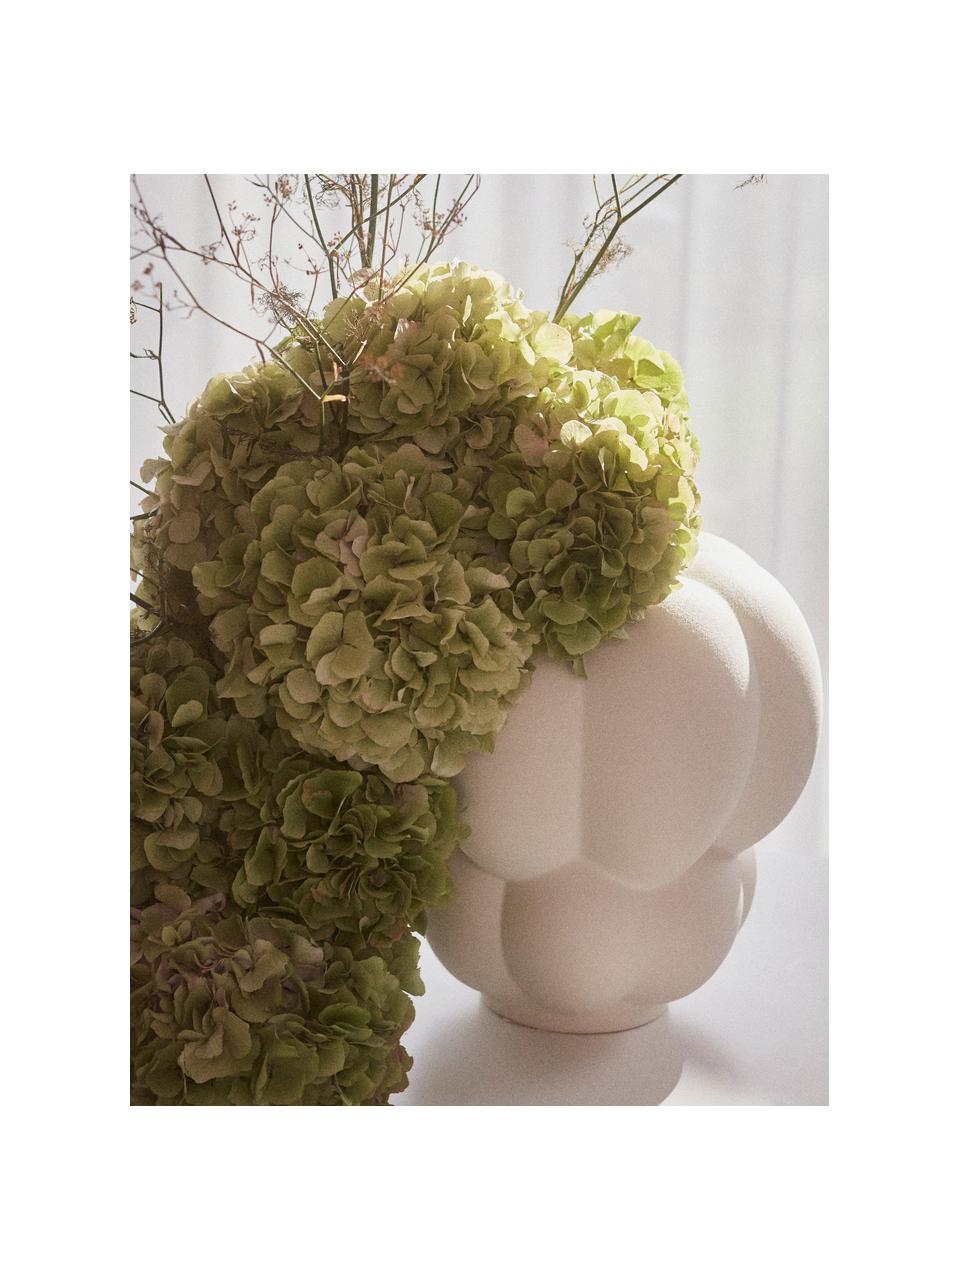 Keramická váza Uva, V 35 cm, Keramika, Tlumeně bílá, Ø 32 cm, V 35 cm